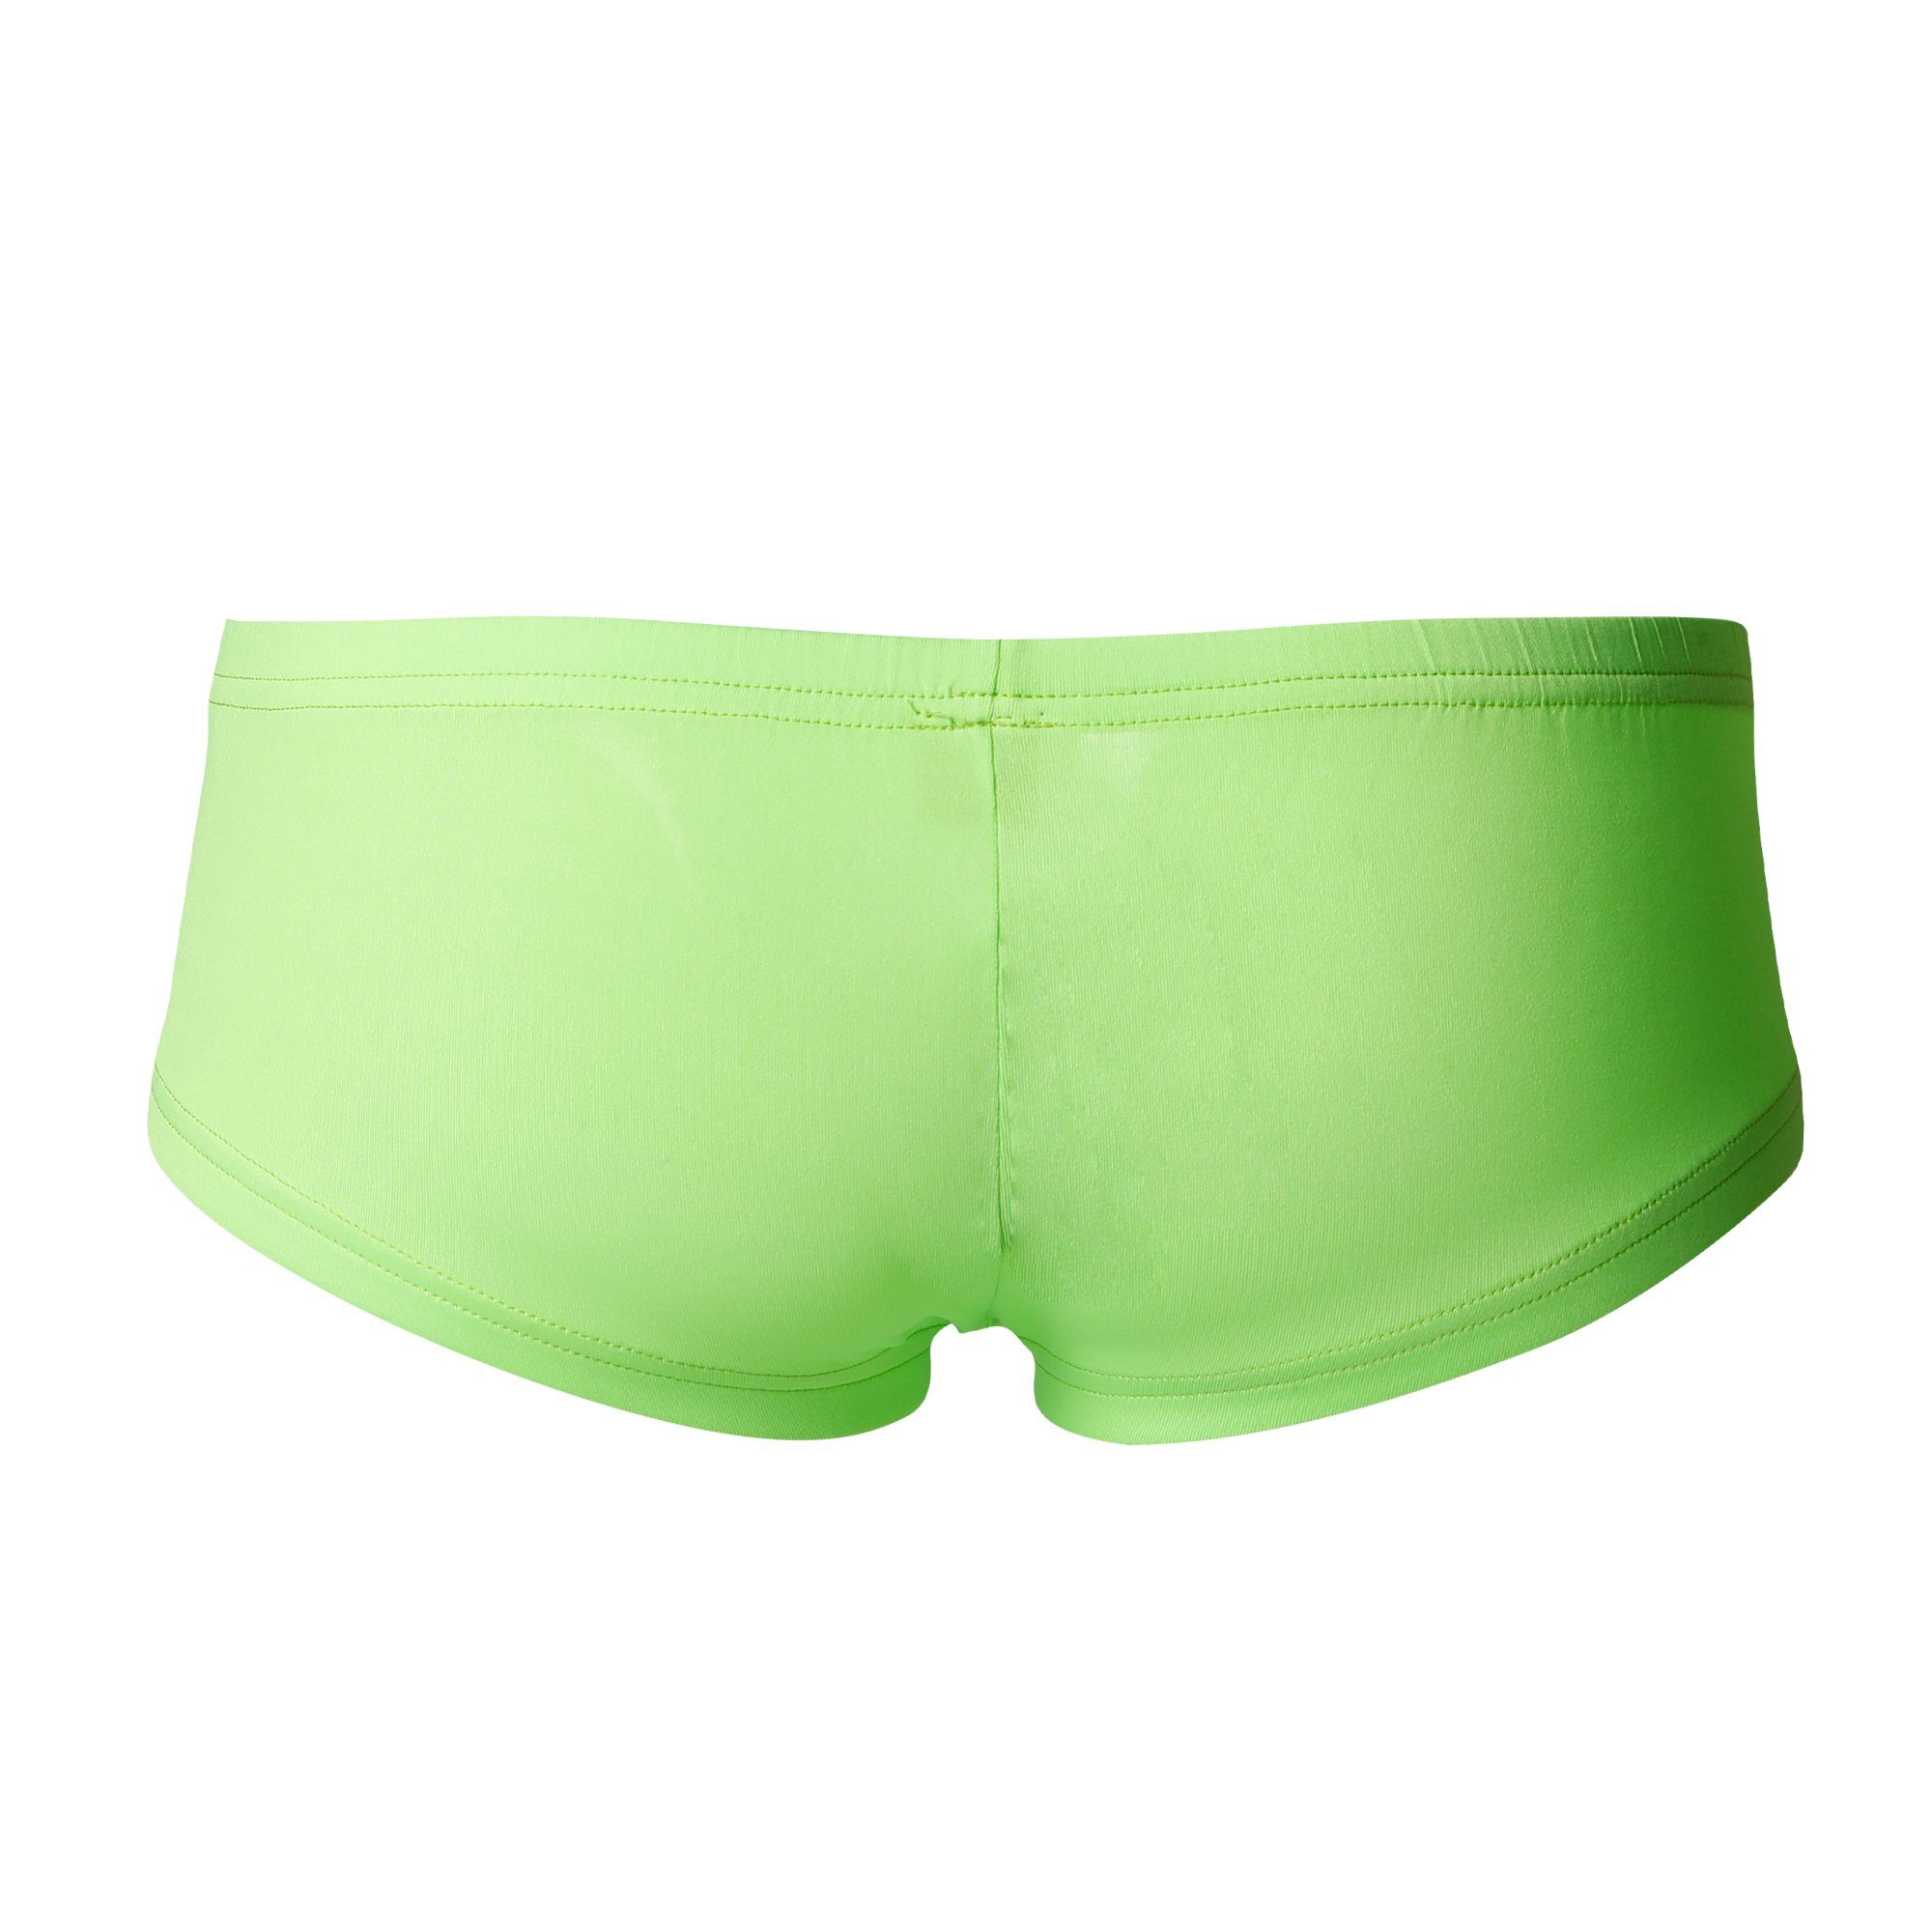 NeonGreen S Pants Booty XL - Retro CUT4MEN CUT4MEN - Shorts